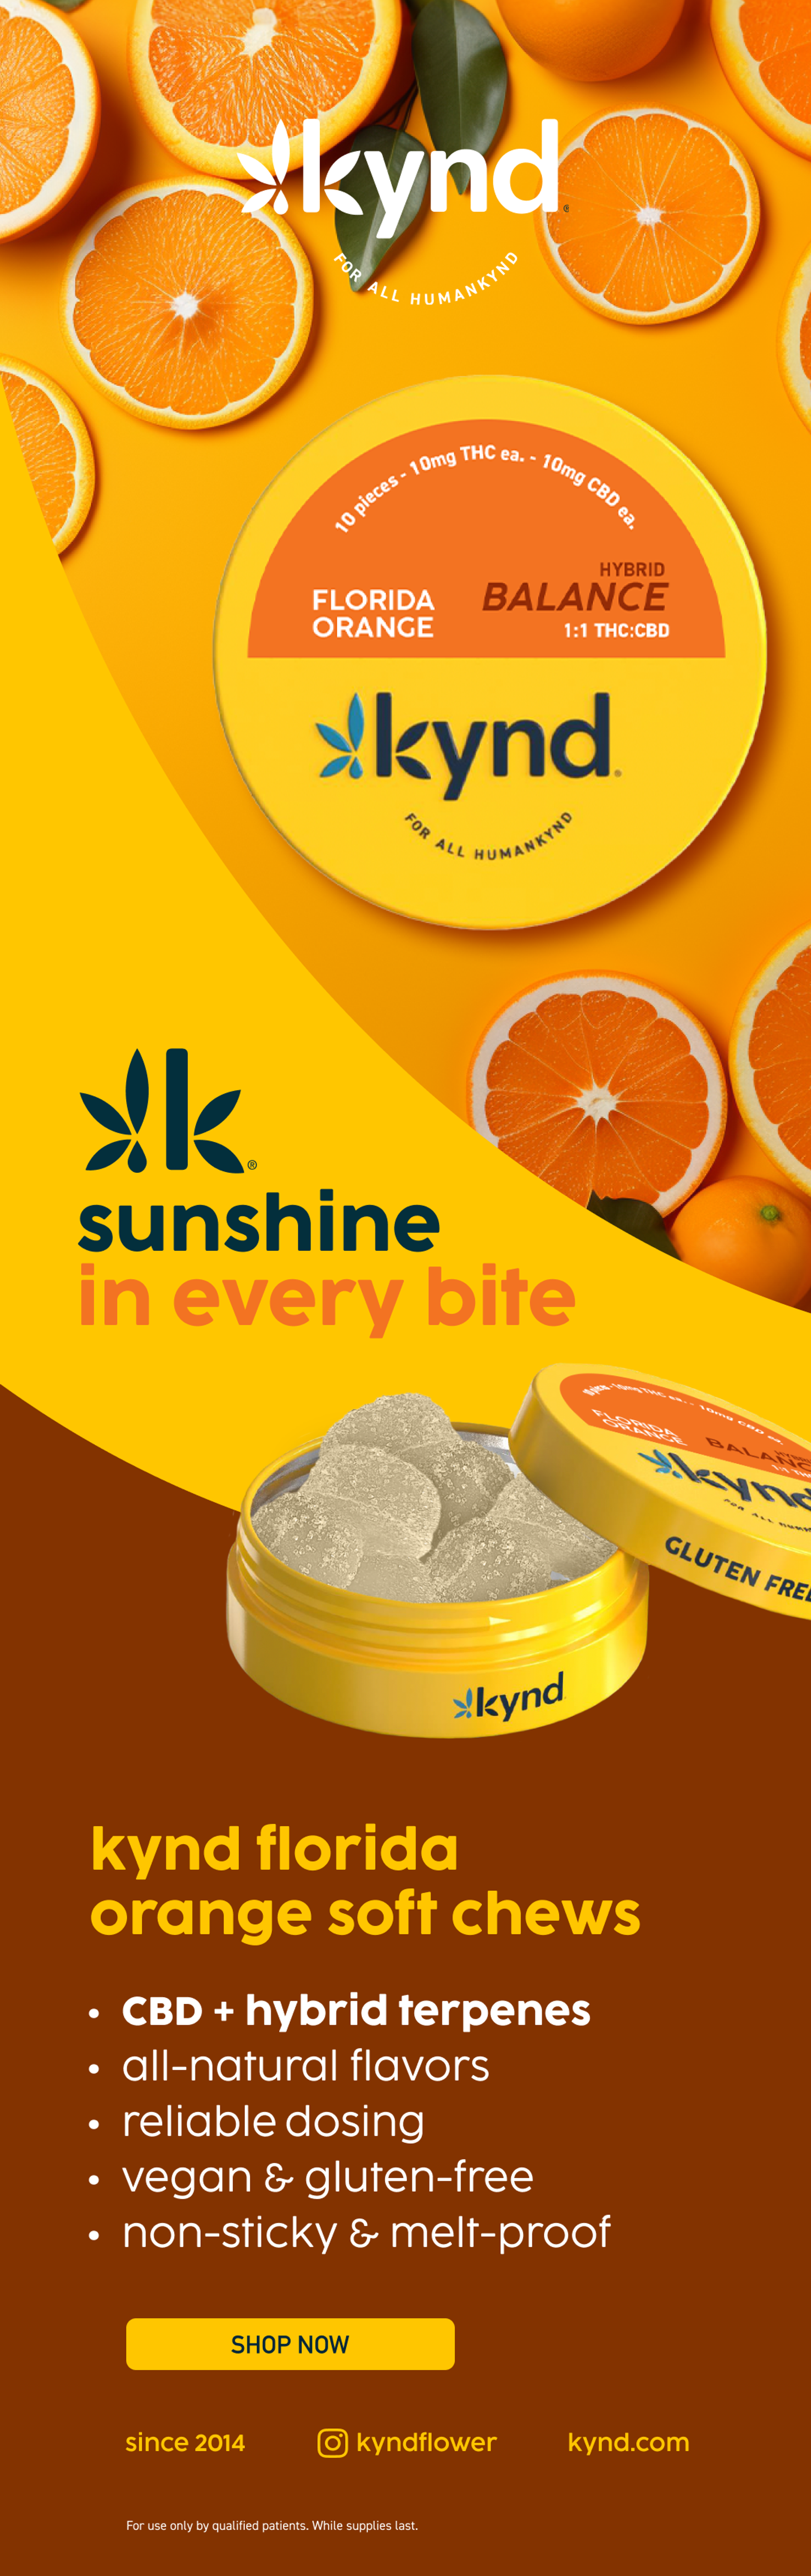 Florida Orange Soft Chews Launch Email